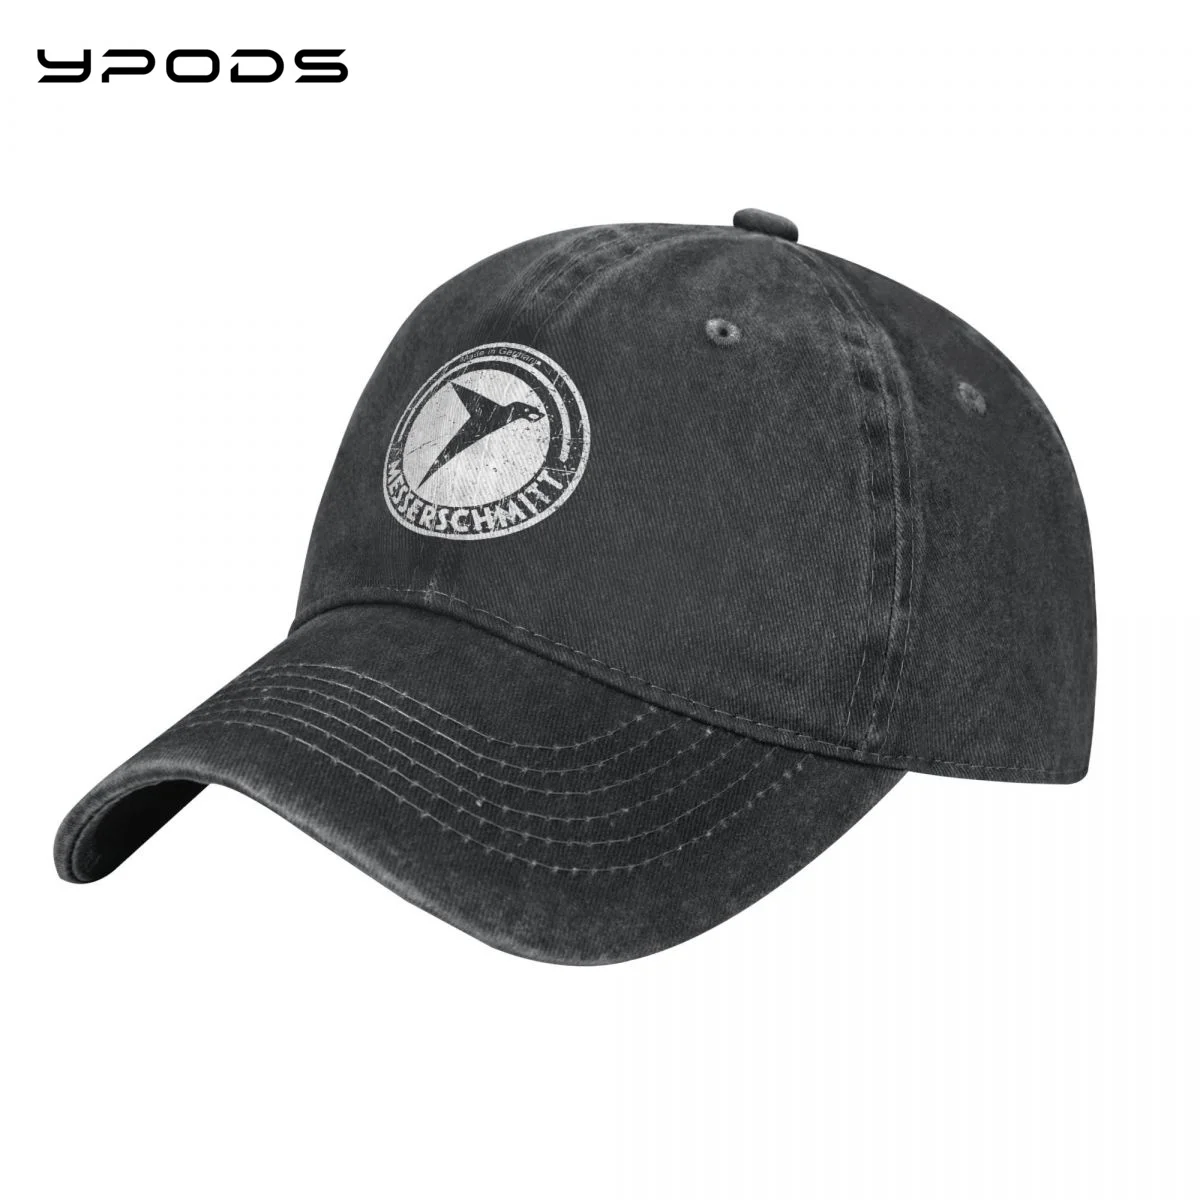 

Messerschmitt German Aircraft Vintage Logo Baseball Caps for Men Women Vintage Washed Cotton Dad Hats Print Snapback Cap Hat